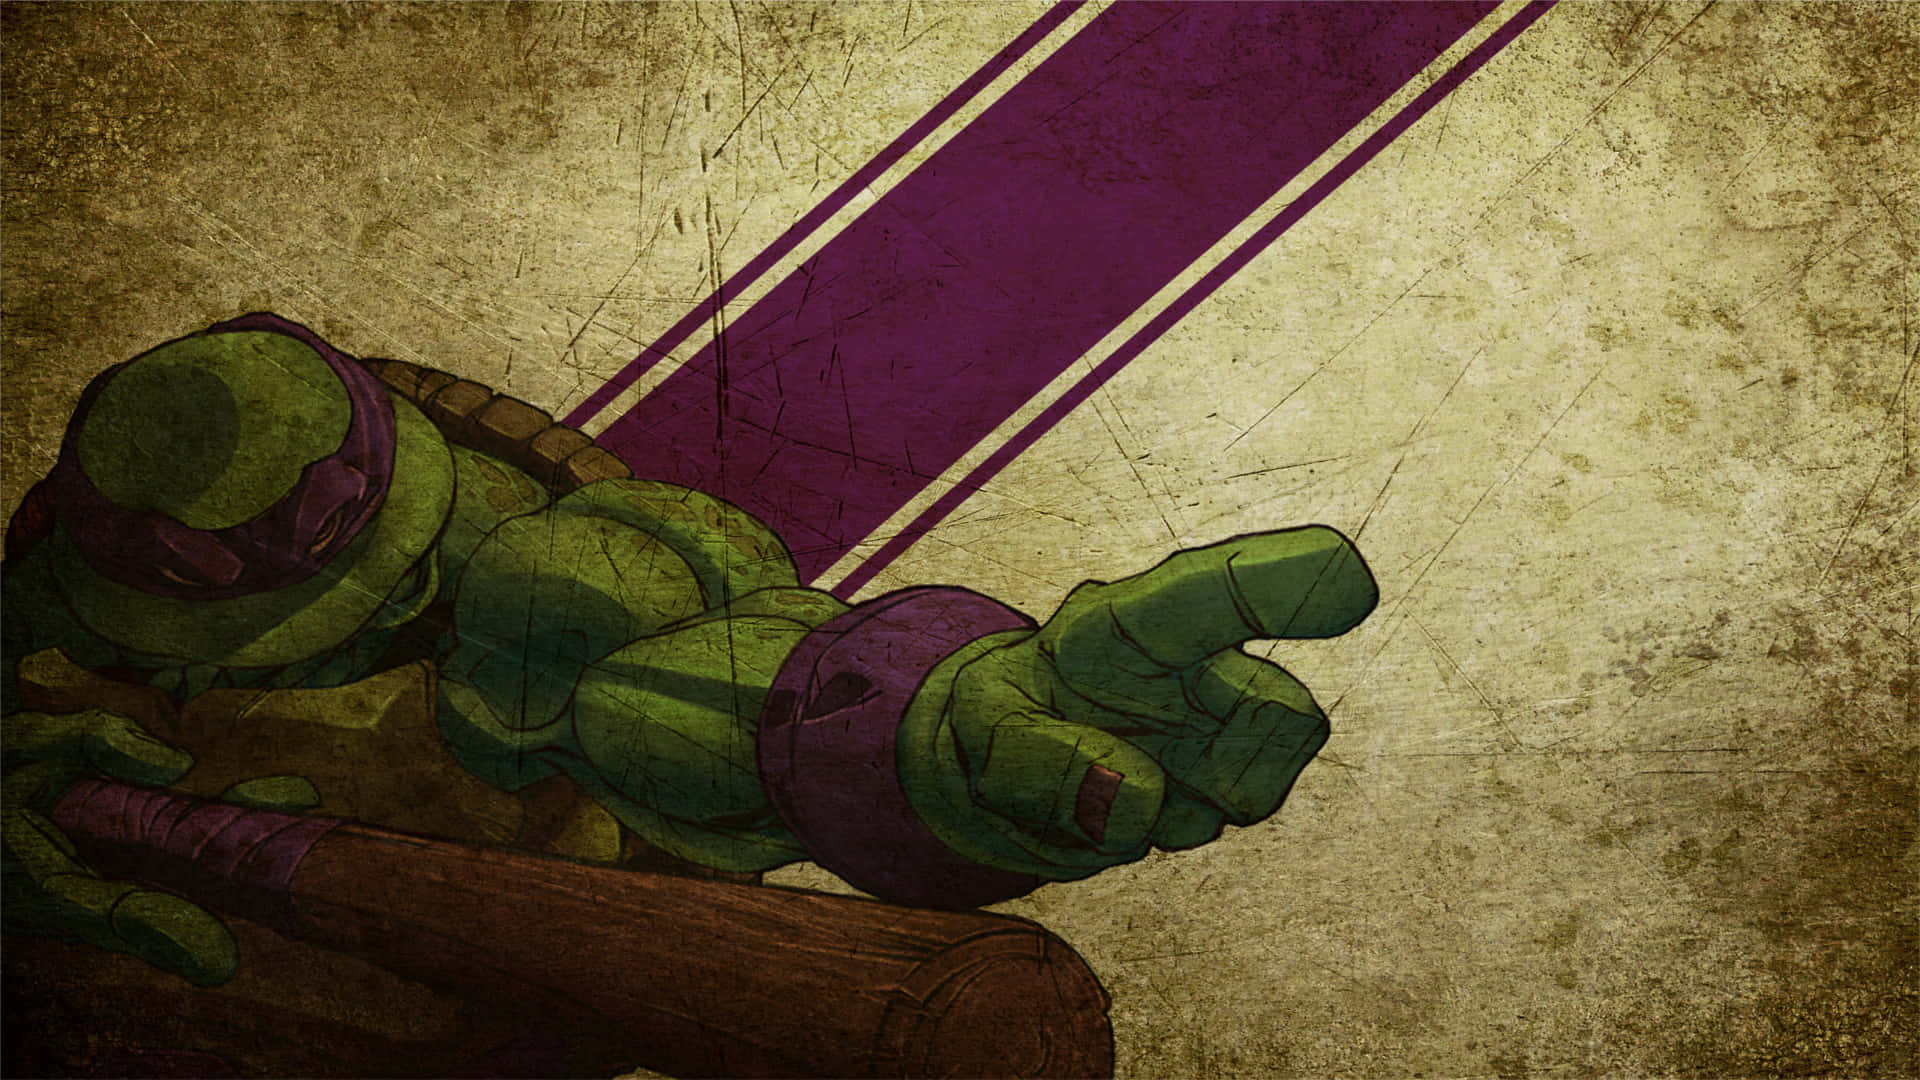 The Teenage Mutant Ninja Turtles in Action Wallpaper